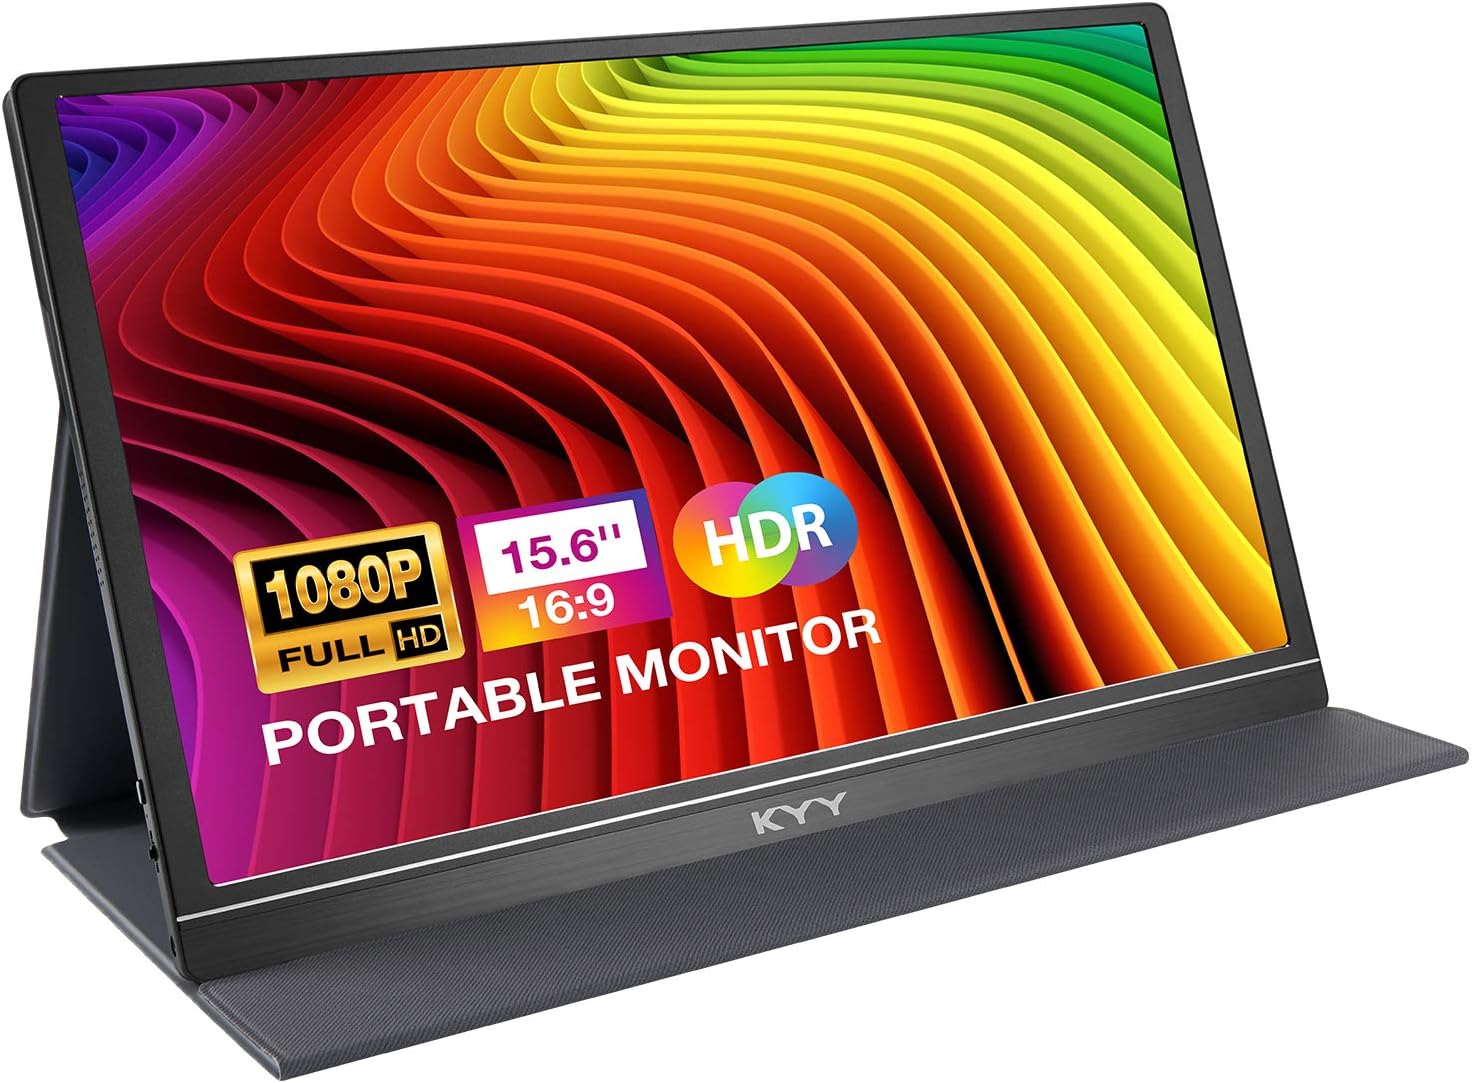 KYY Portable Monitor 15.6'' FHD 1080P Portable Laptop [...]